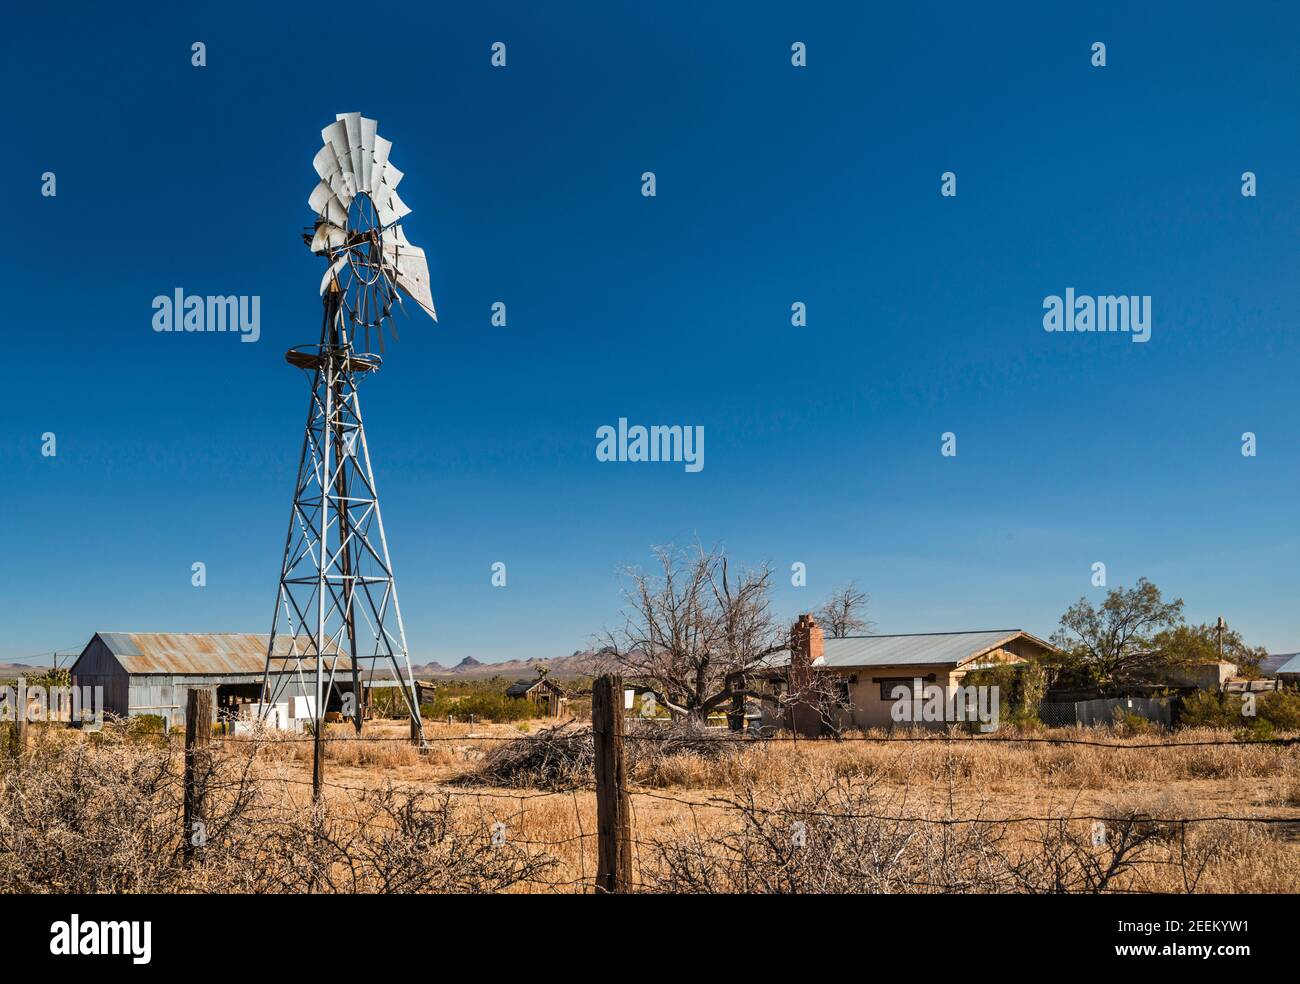 Aermotor style water pump at ranch at Lanfair site, Lanfair Valley, Mojave National Preserve, California, USA Stock Photo